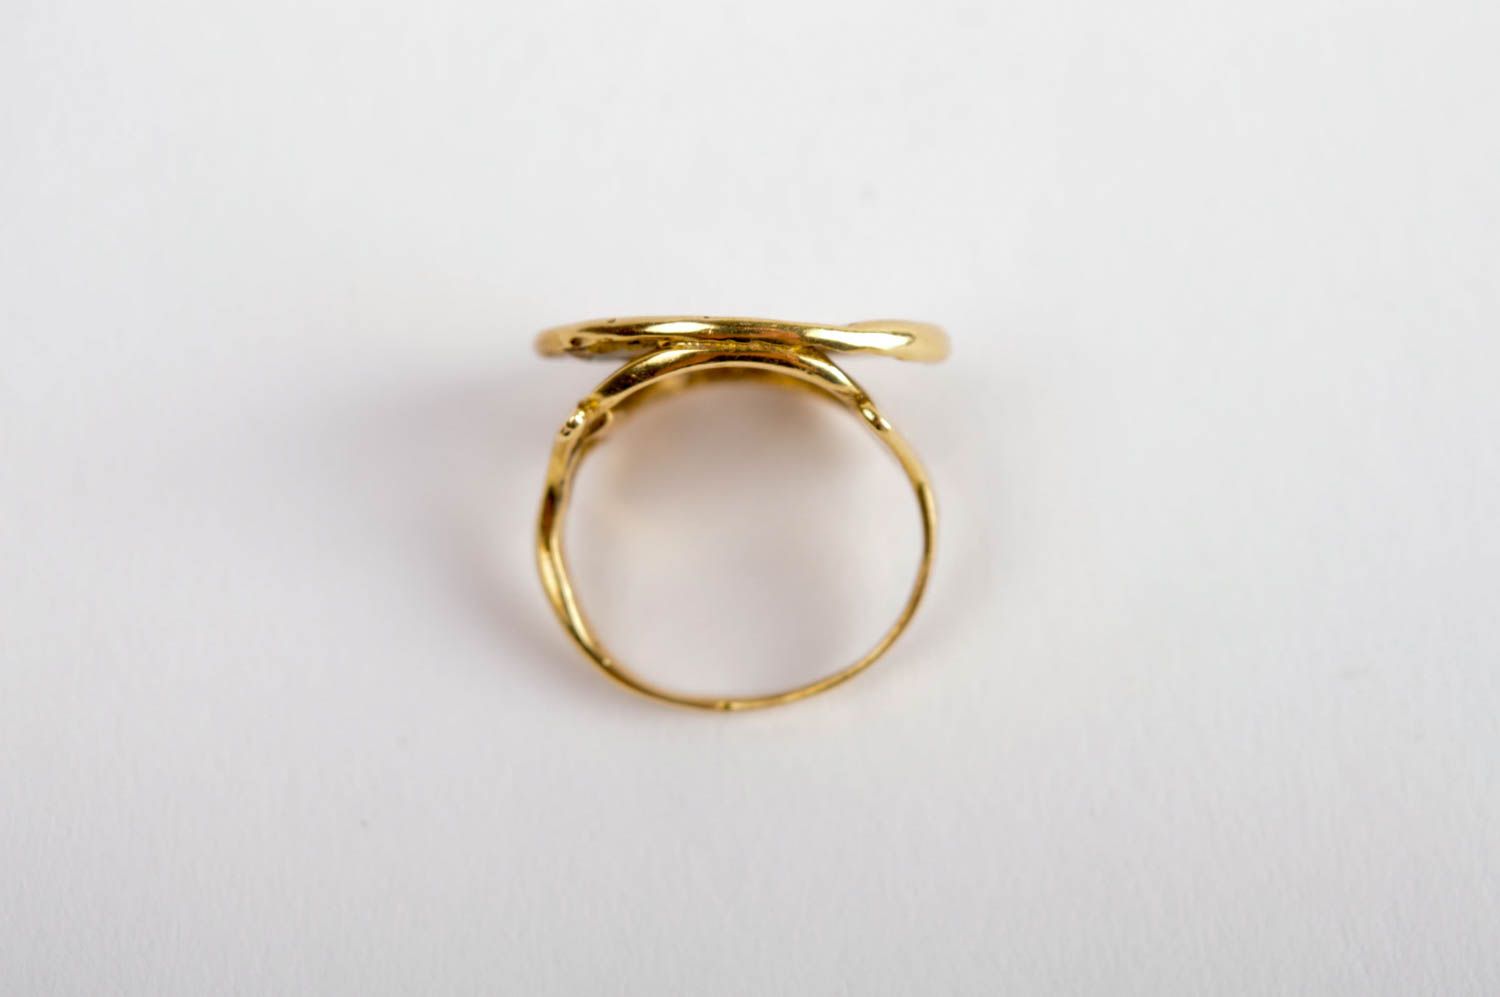 Handmade brass ring stylish elegant jewelry unusual metal ring cute gift photo 5